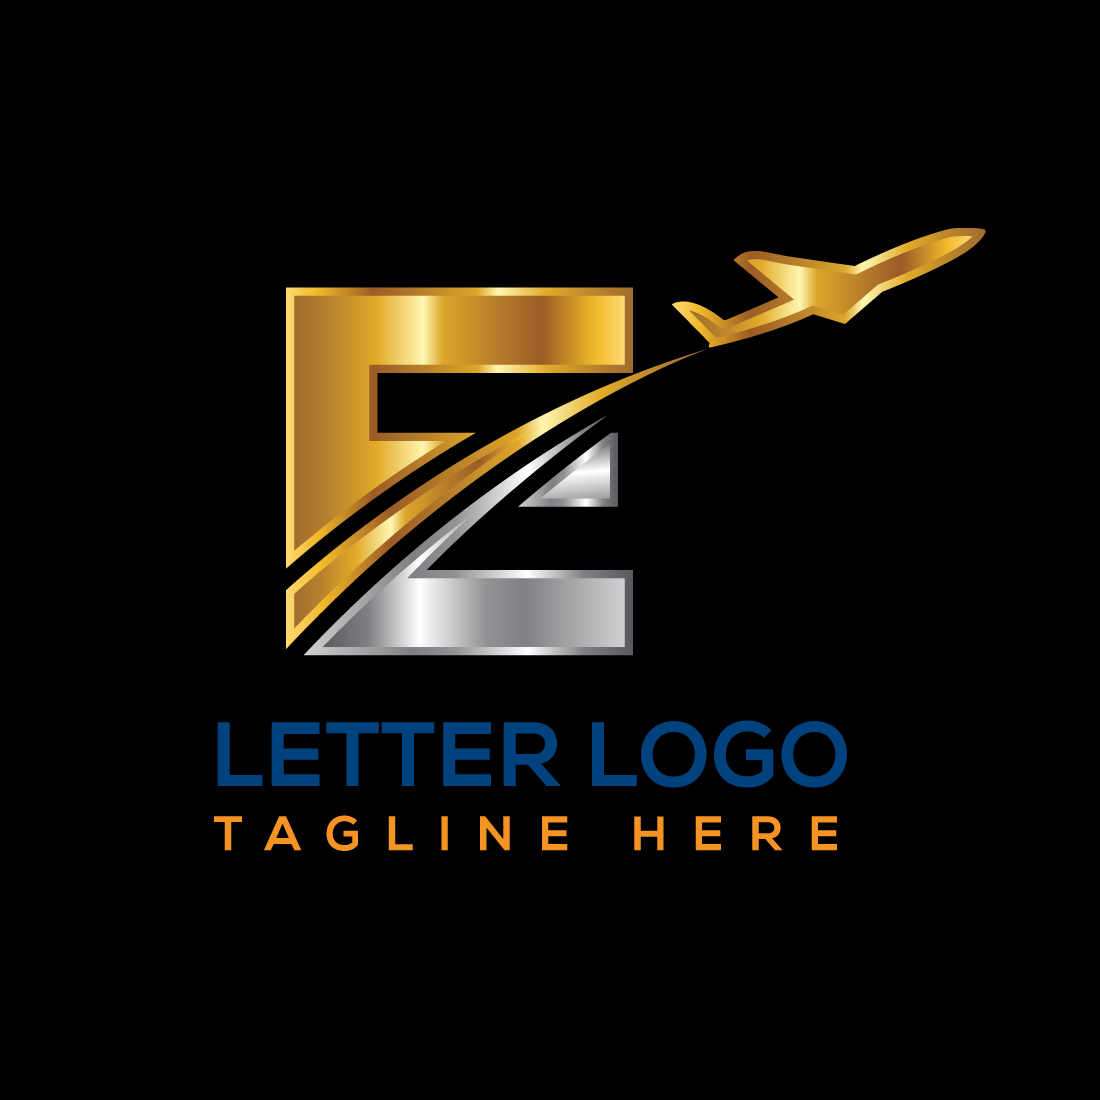 Airline E Letter Logo Design cover image.